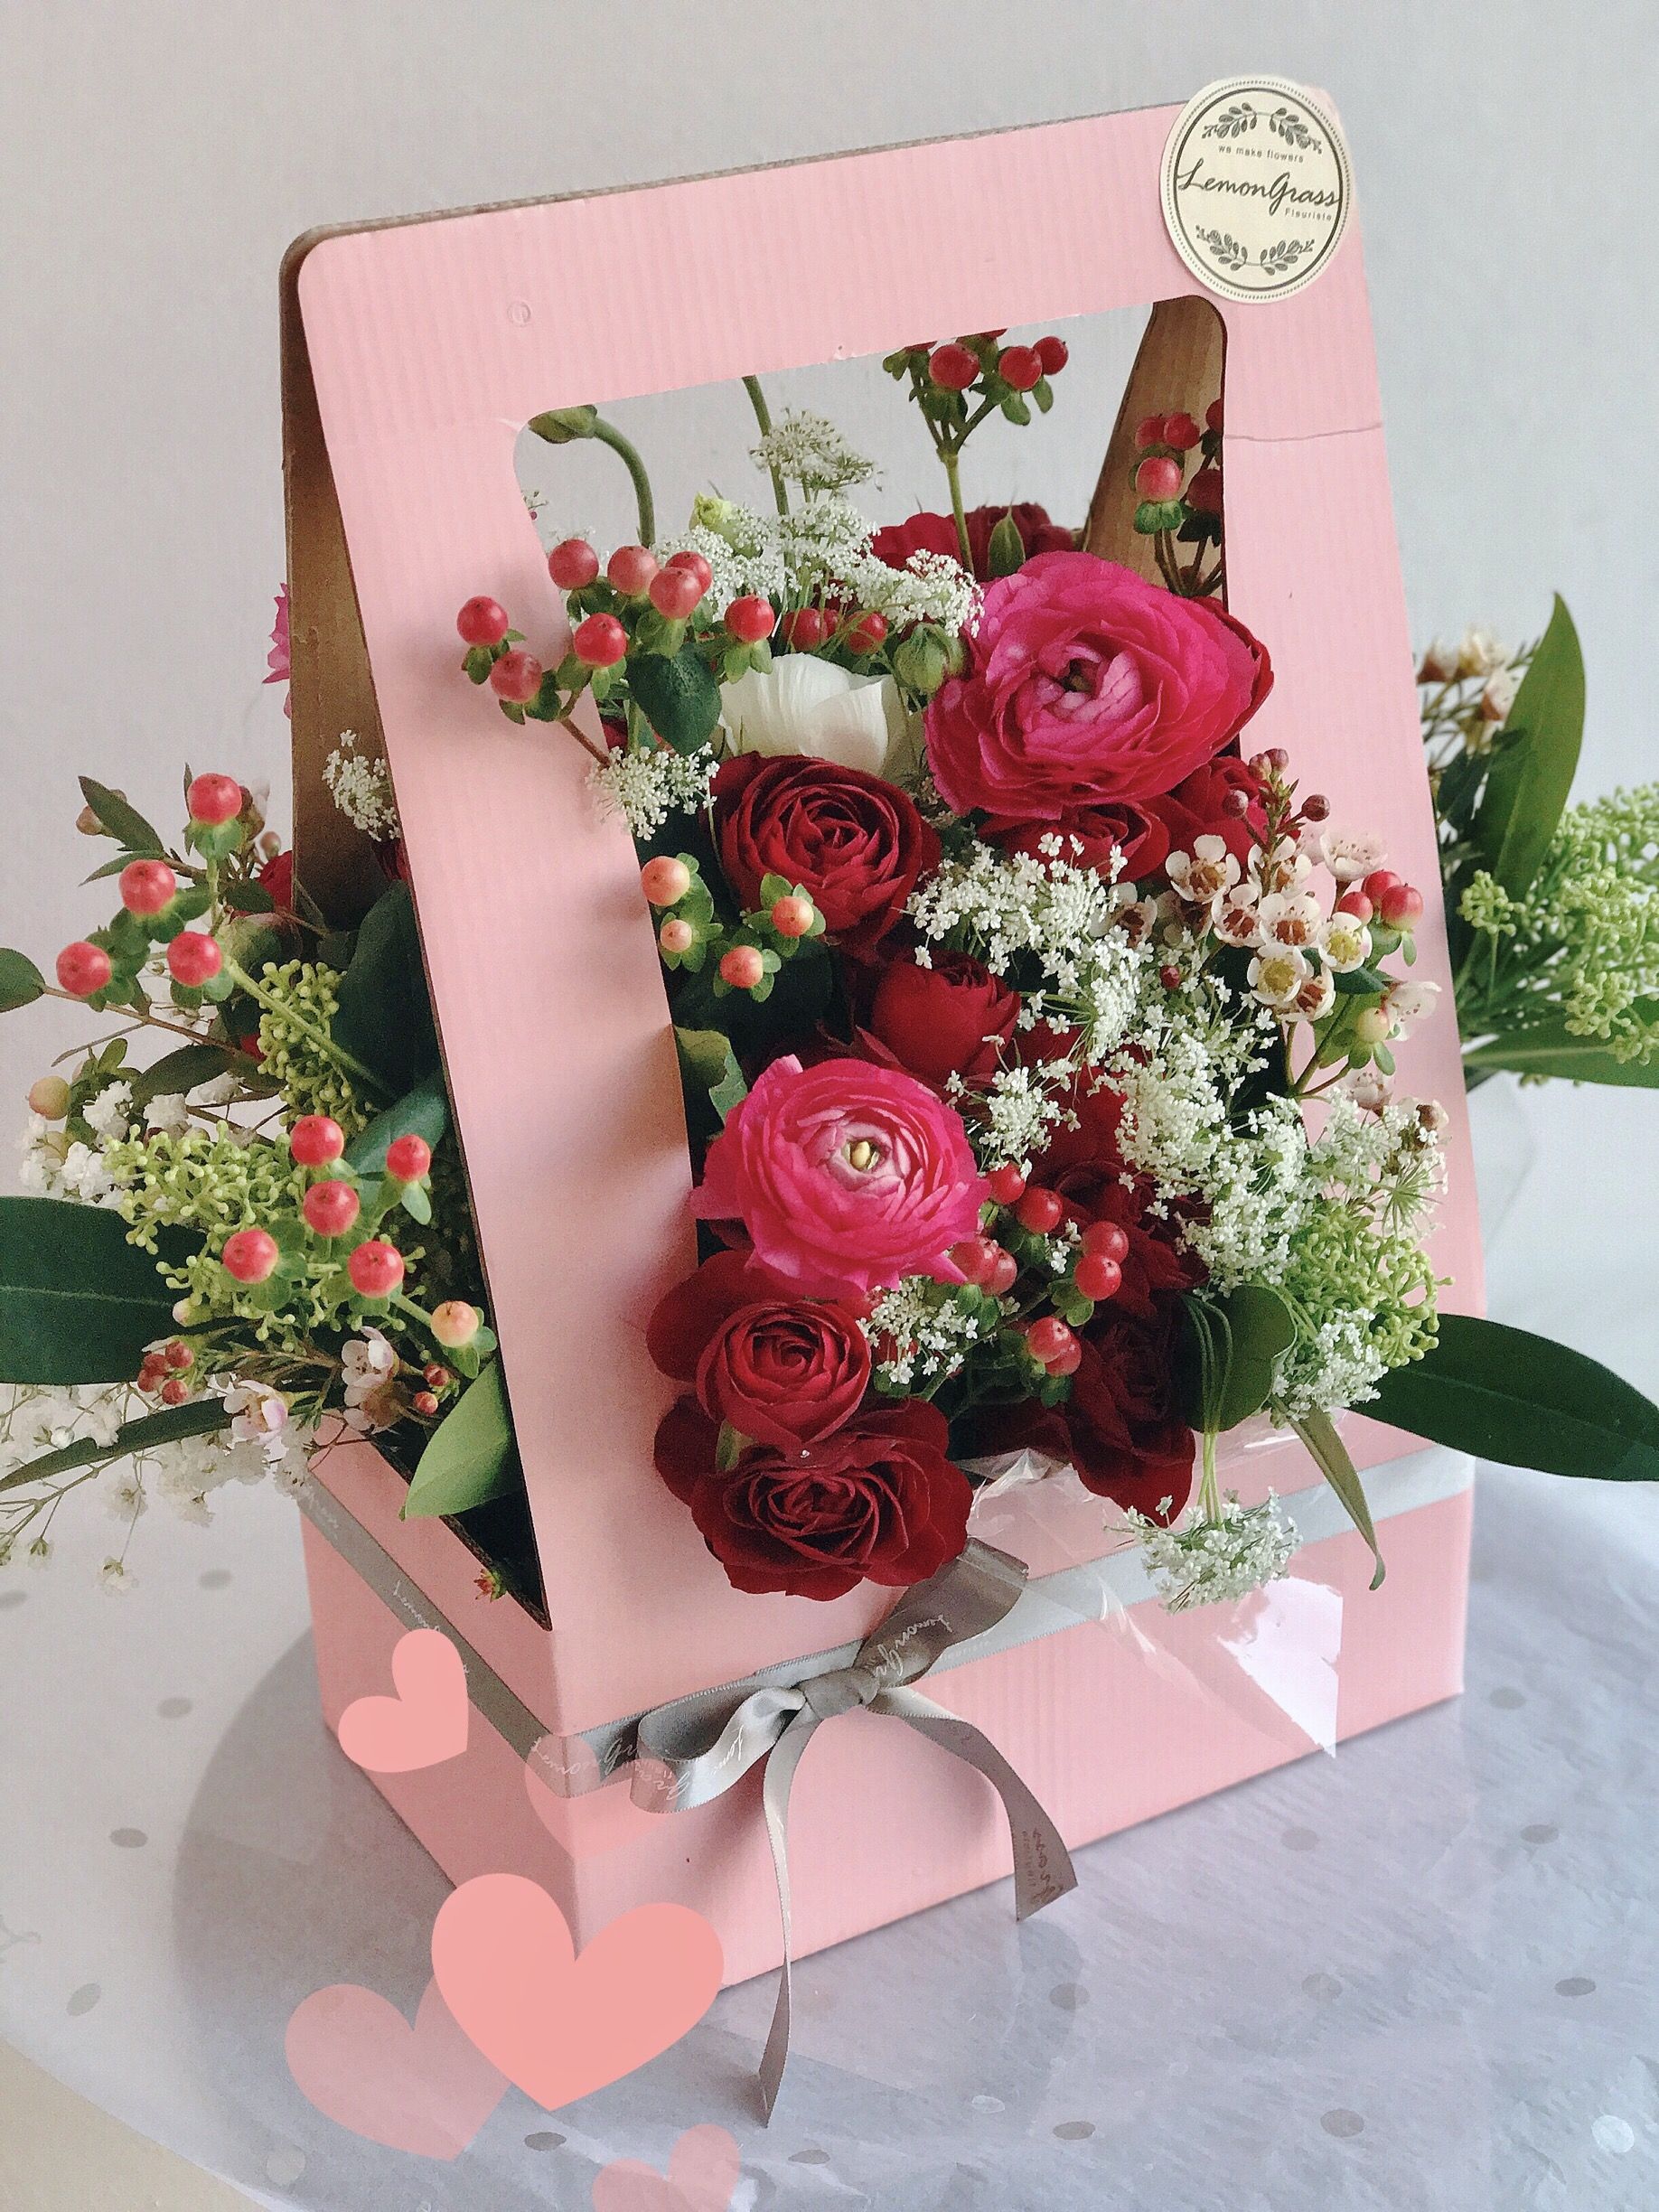 مجموعة صور ورود جميلة صور ورد وزهور Rose Flower Images